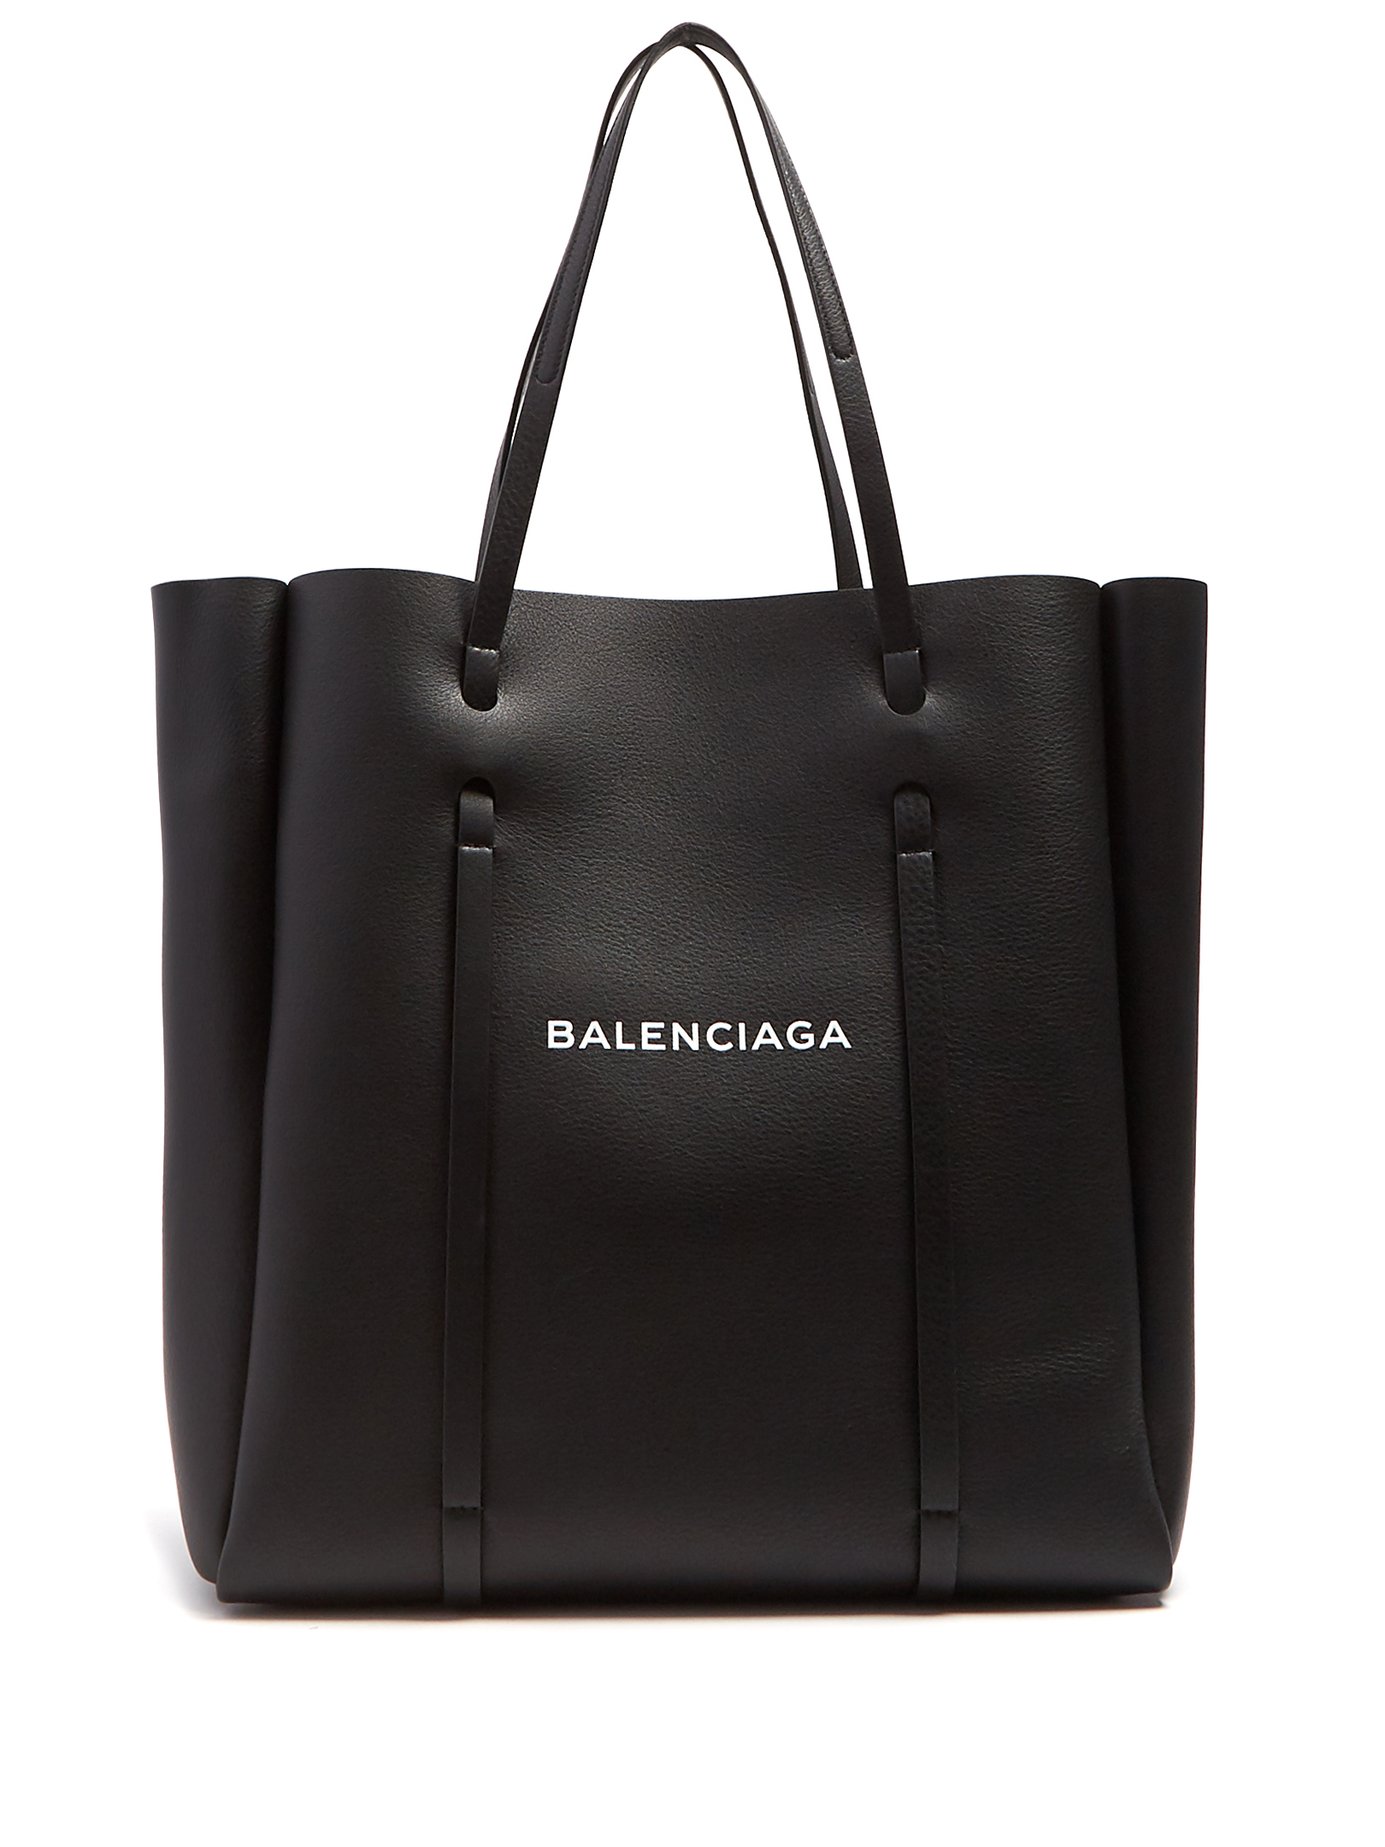 BALENCIAGA Large Everyday Leather Tote Bag, Black White | ModeSens